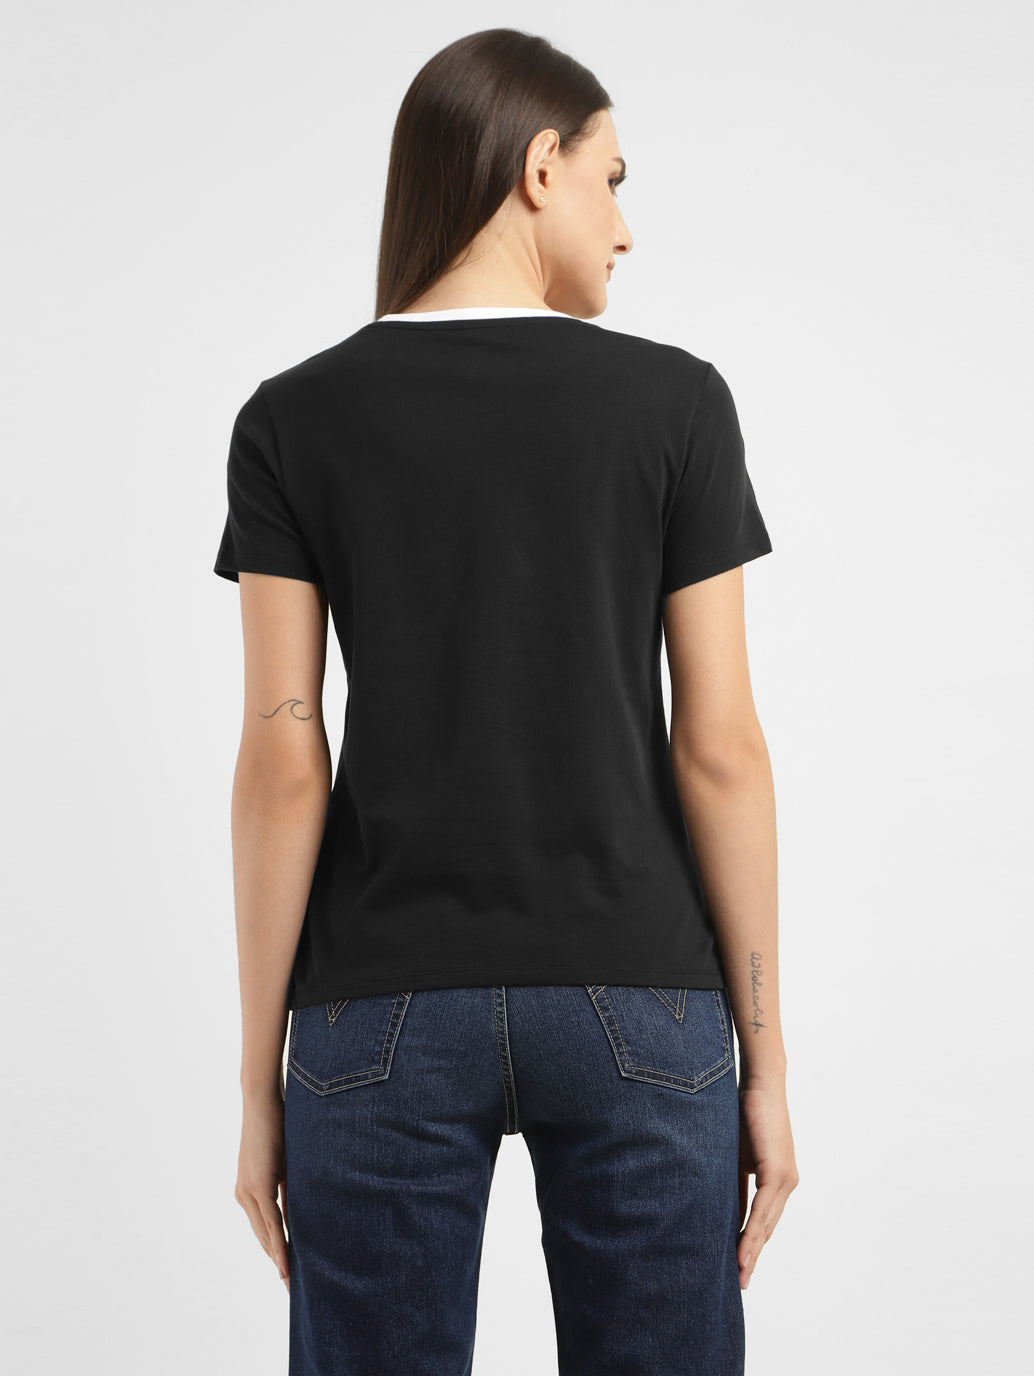 Women's Graphic Print Regular Fit T-Shirts